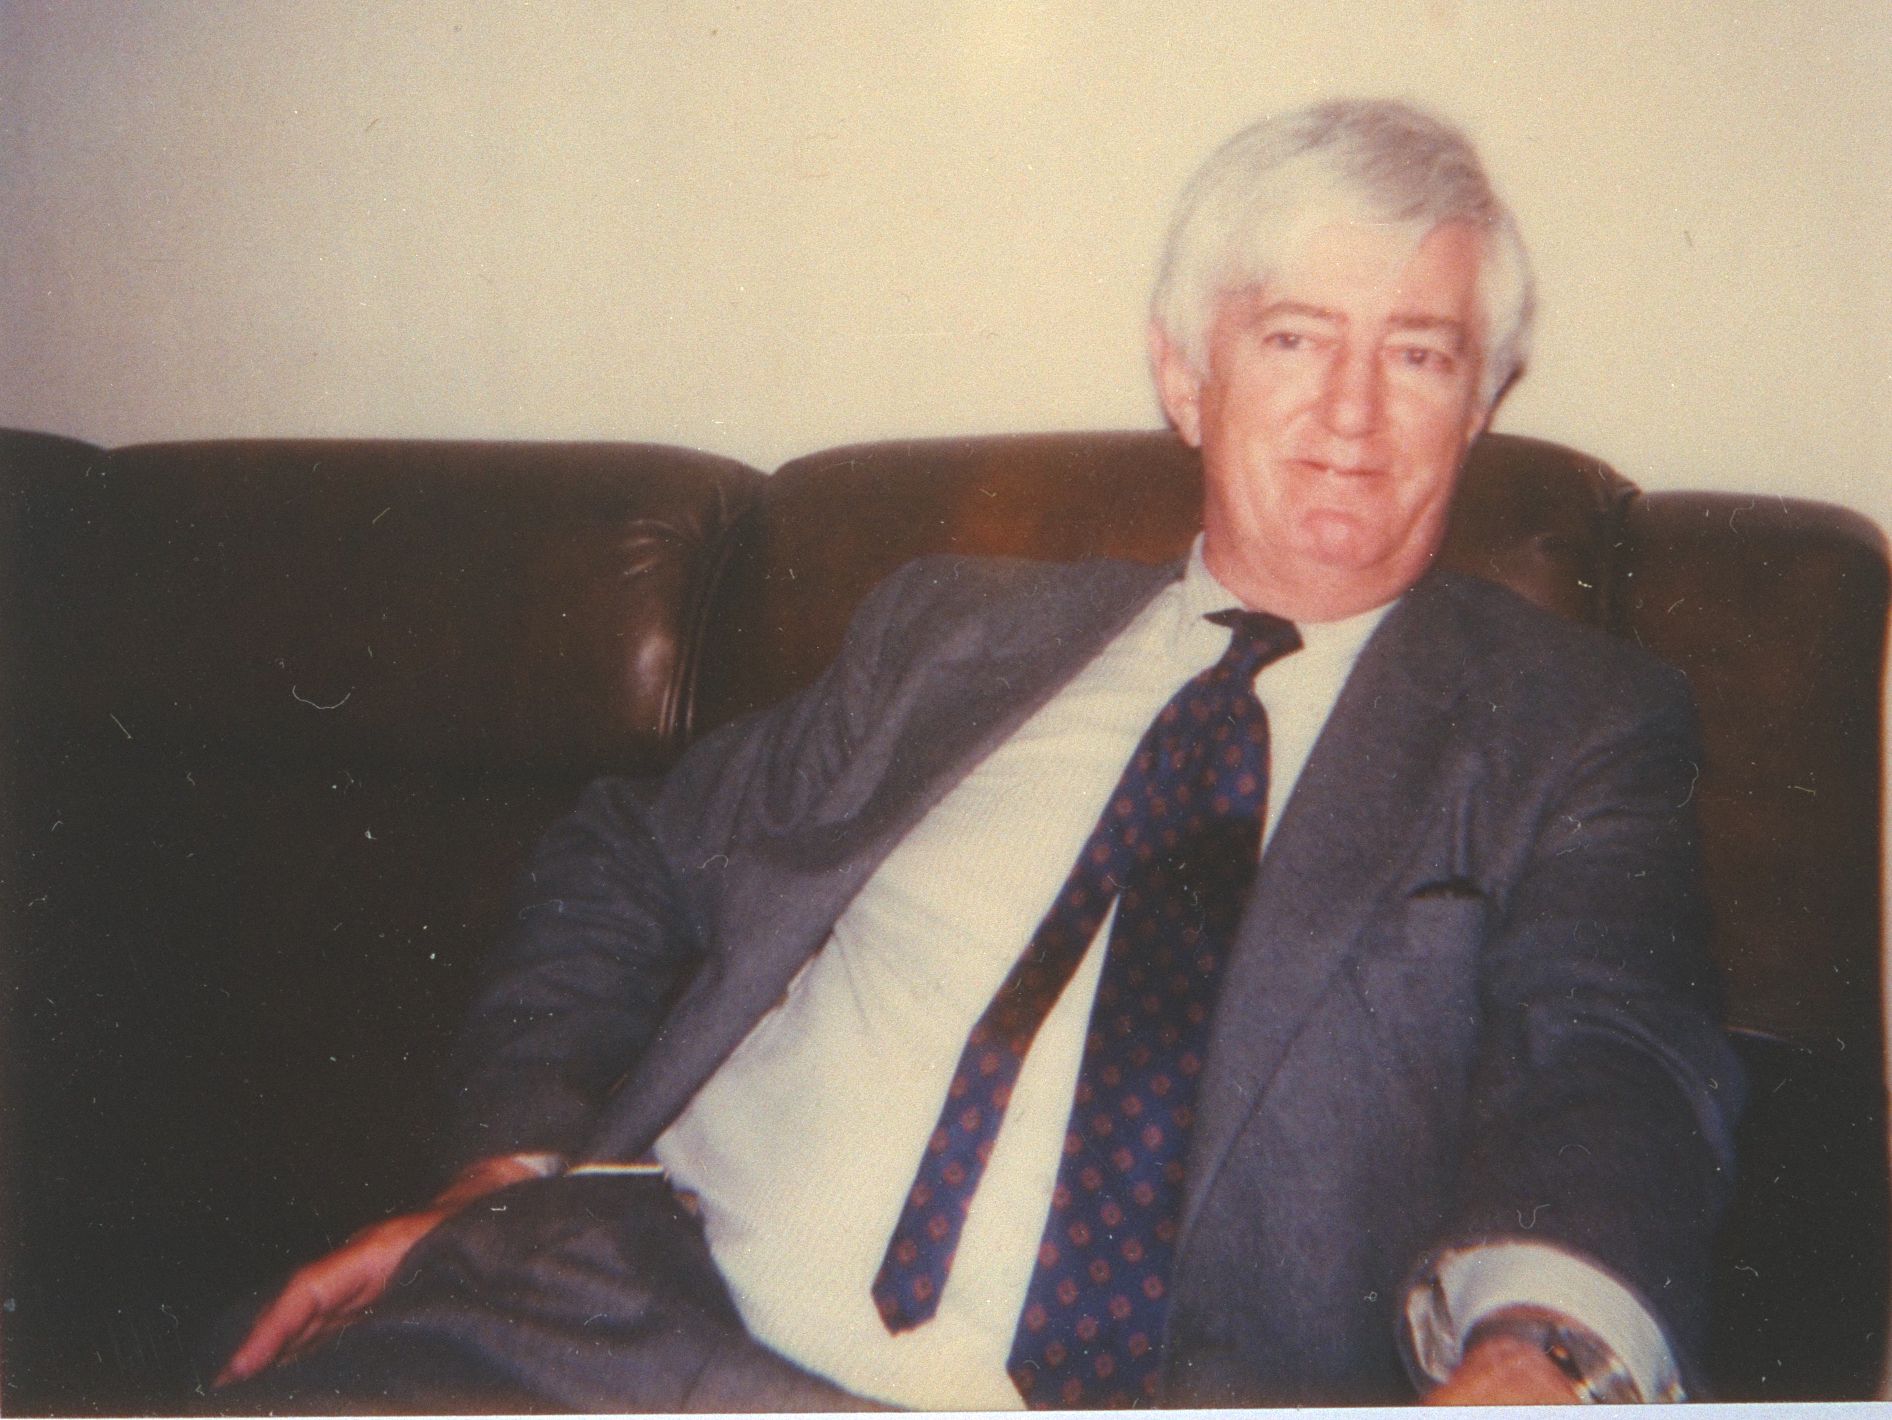 Oliver Gordon Selfridge at Purdue, 1989